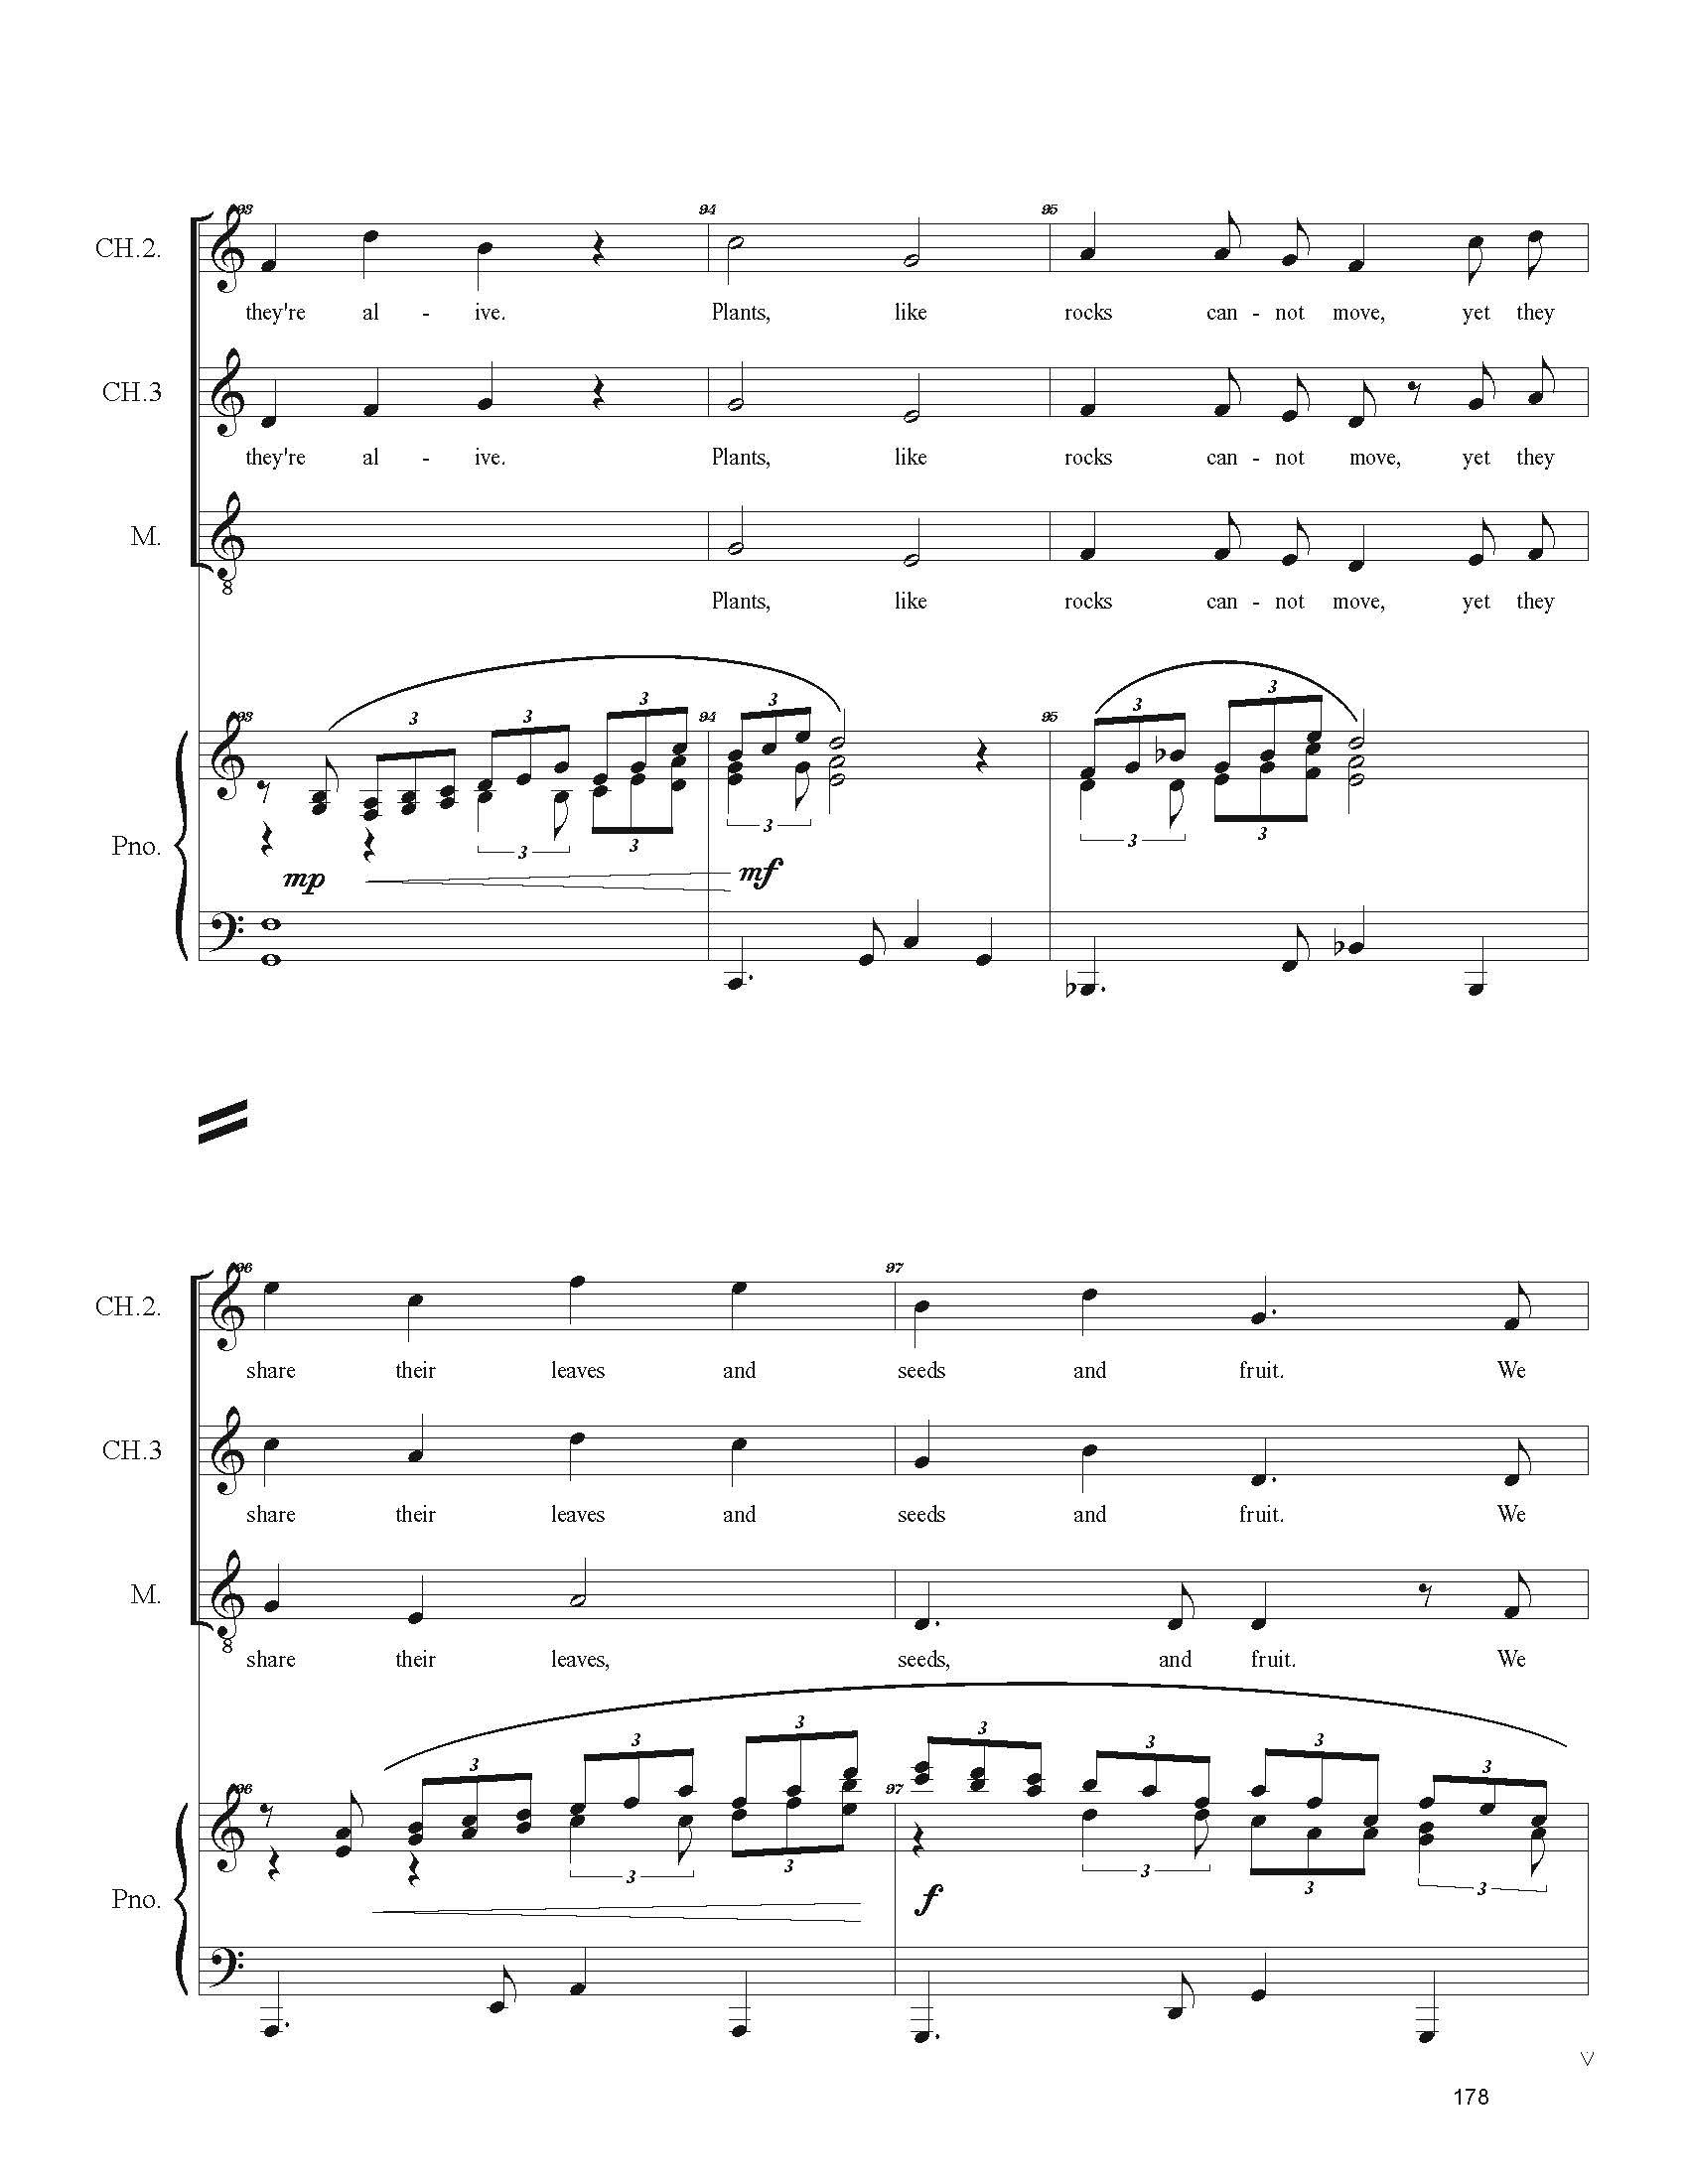 FULL PIANO VOCAL SCORE DRAFT 1 - Score_Page_178.jpg